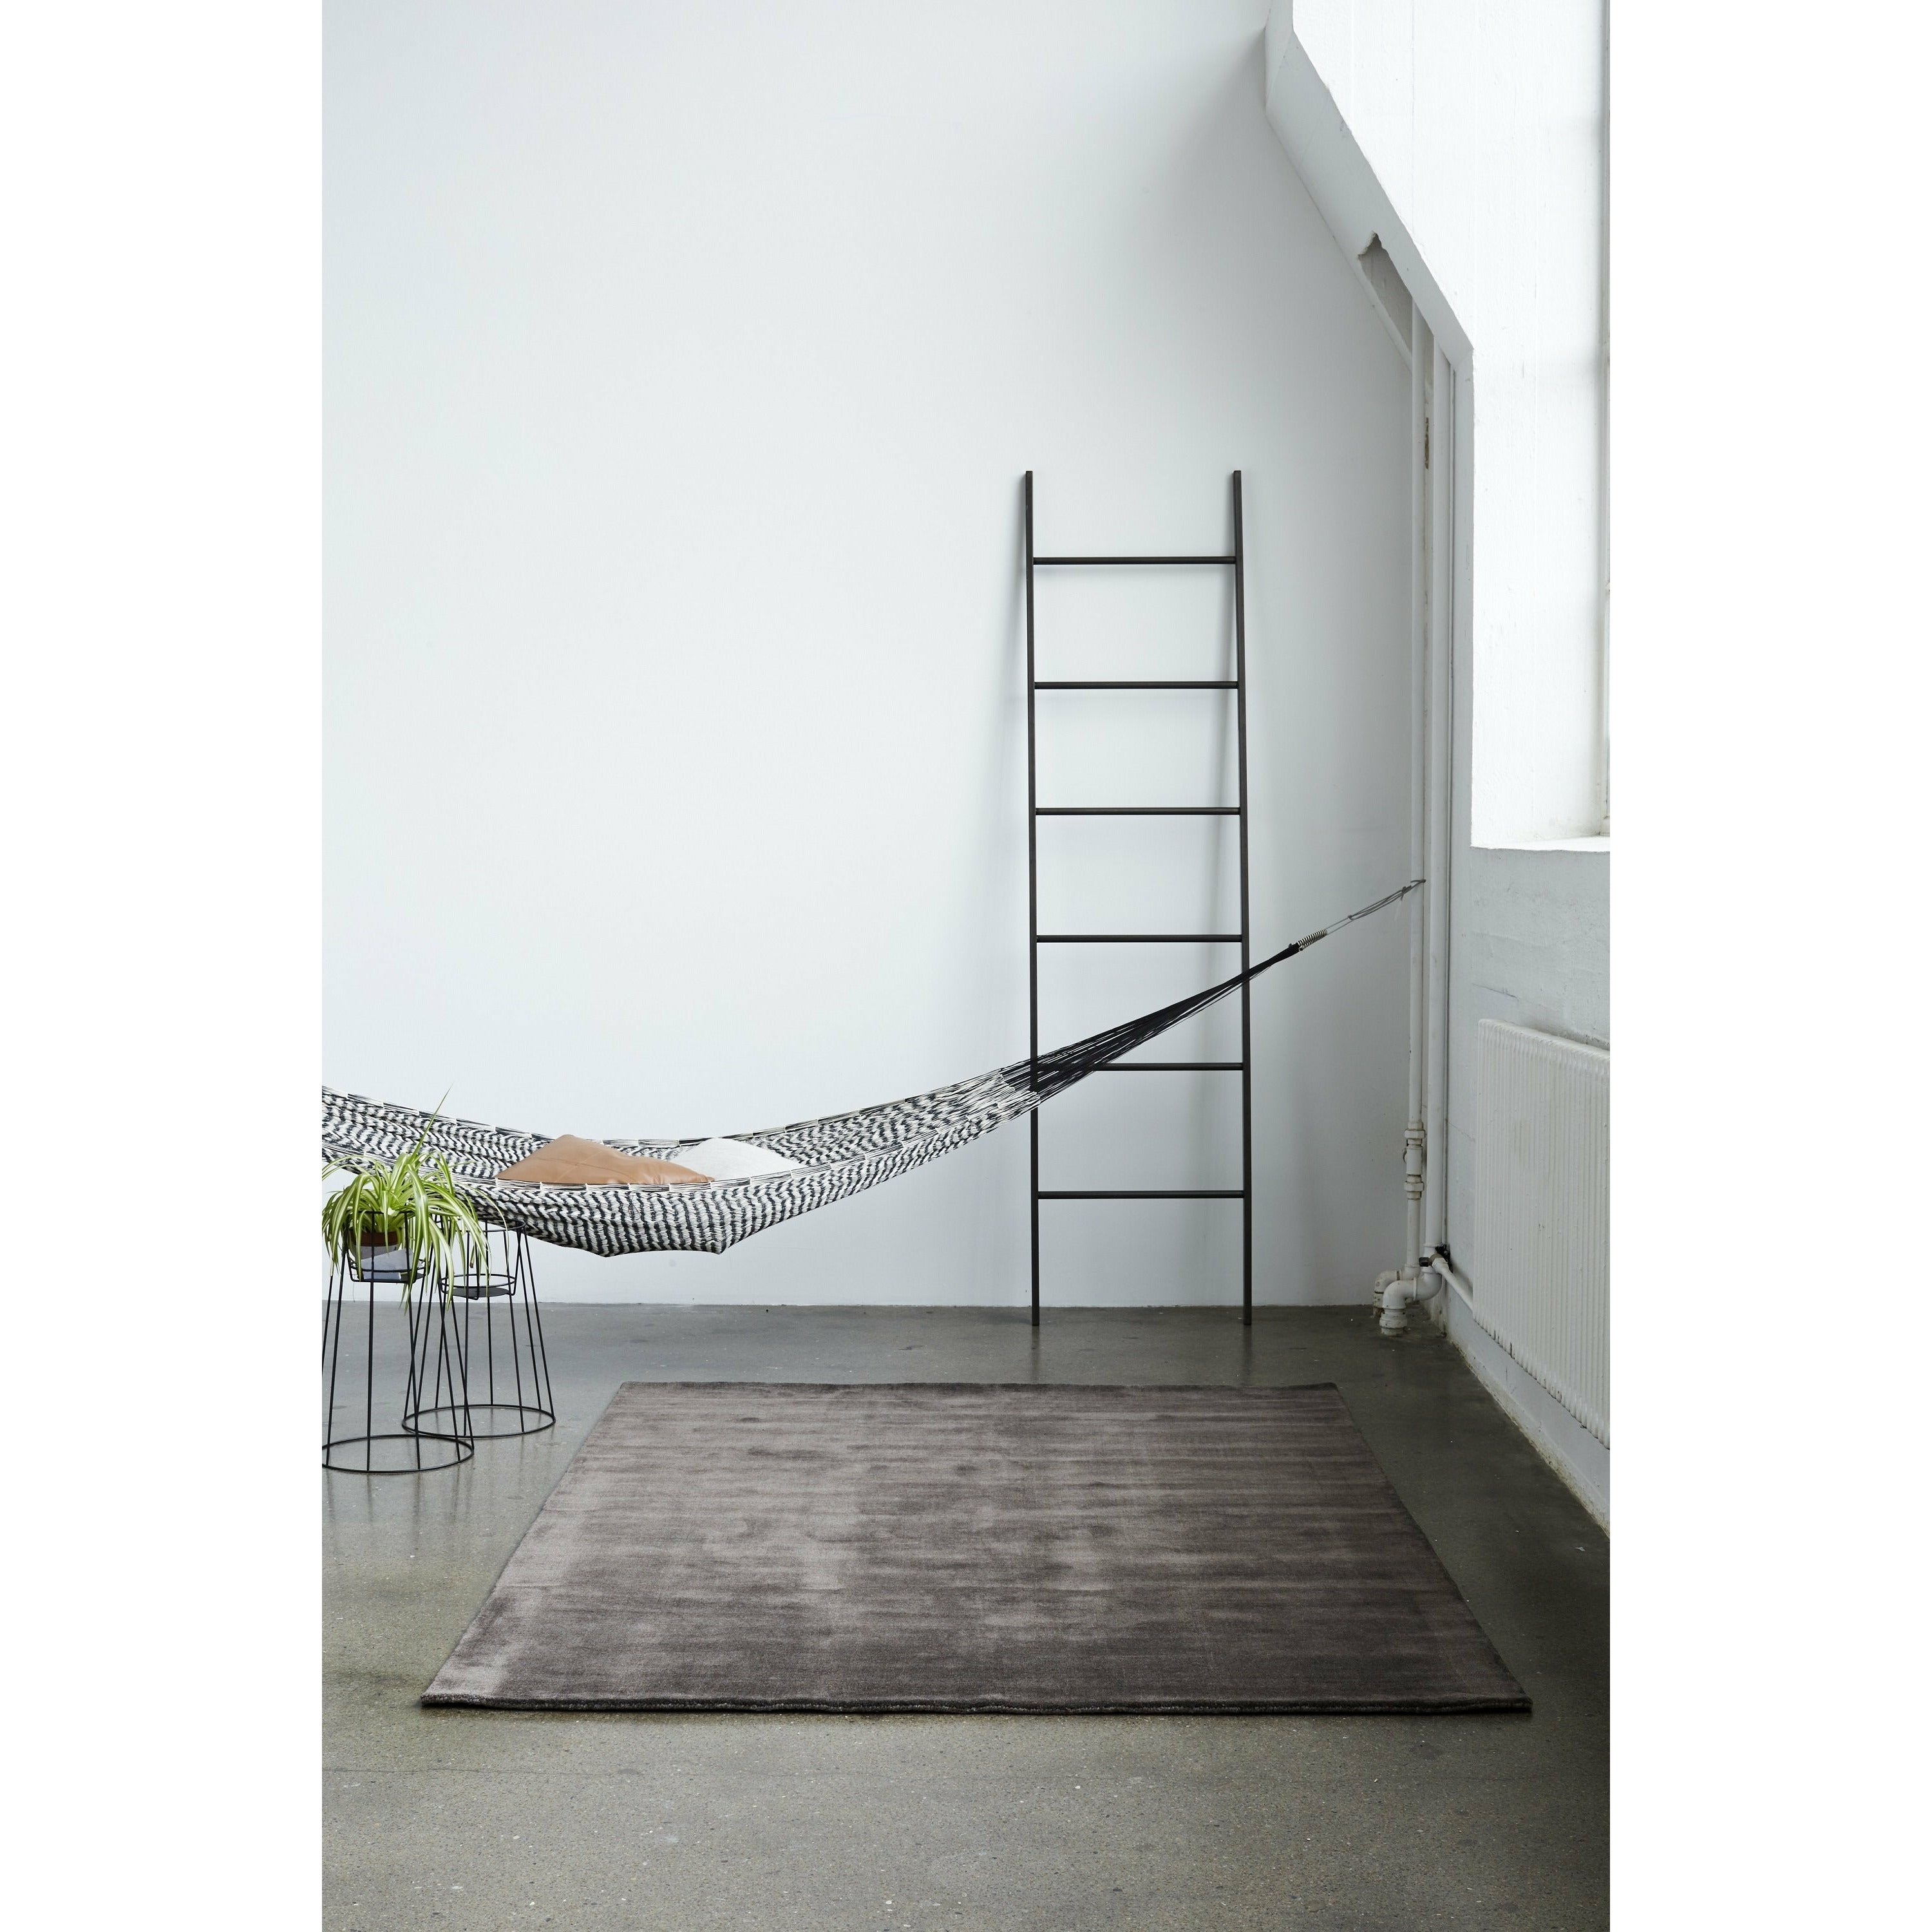 Massimo Země bambusový koberec teplá šedá, 140x200 cm